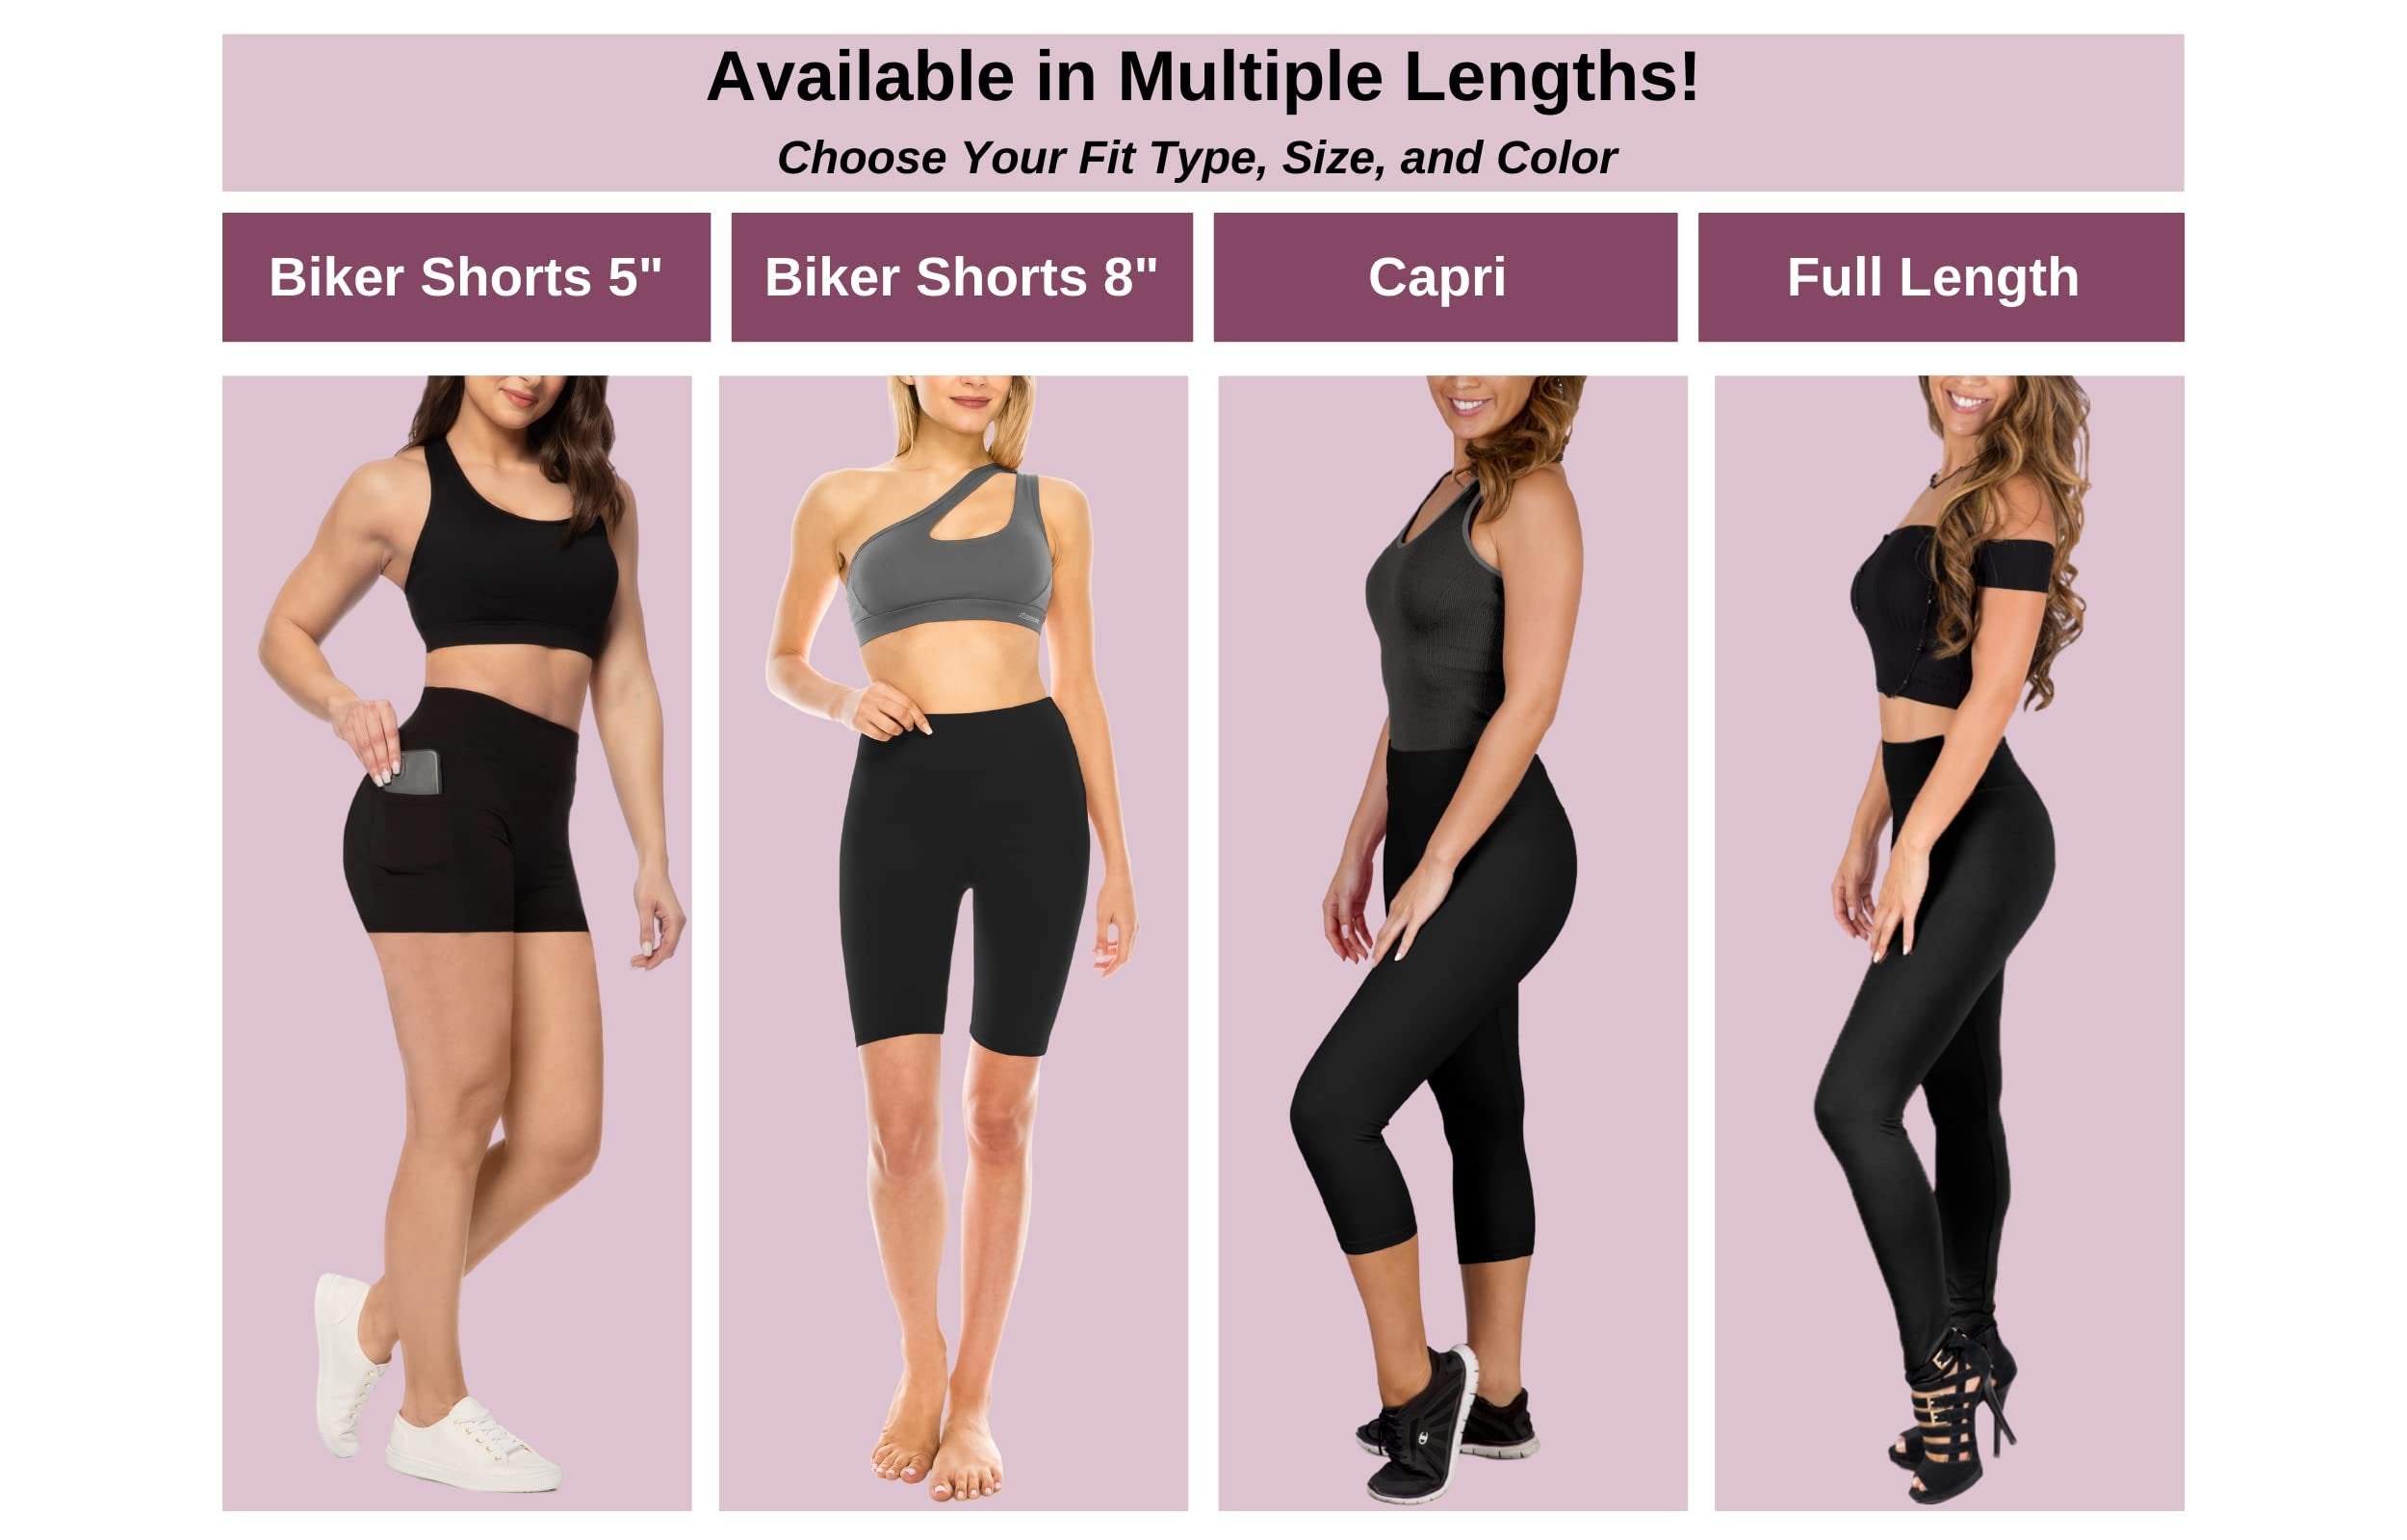 SATINA High Waisted Capri Leggings for Women - Capri Leggings for Women - High Waist for Tummy Control - Tan Capri Leggings for |3 Inch Waistband (One Size, Tan)